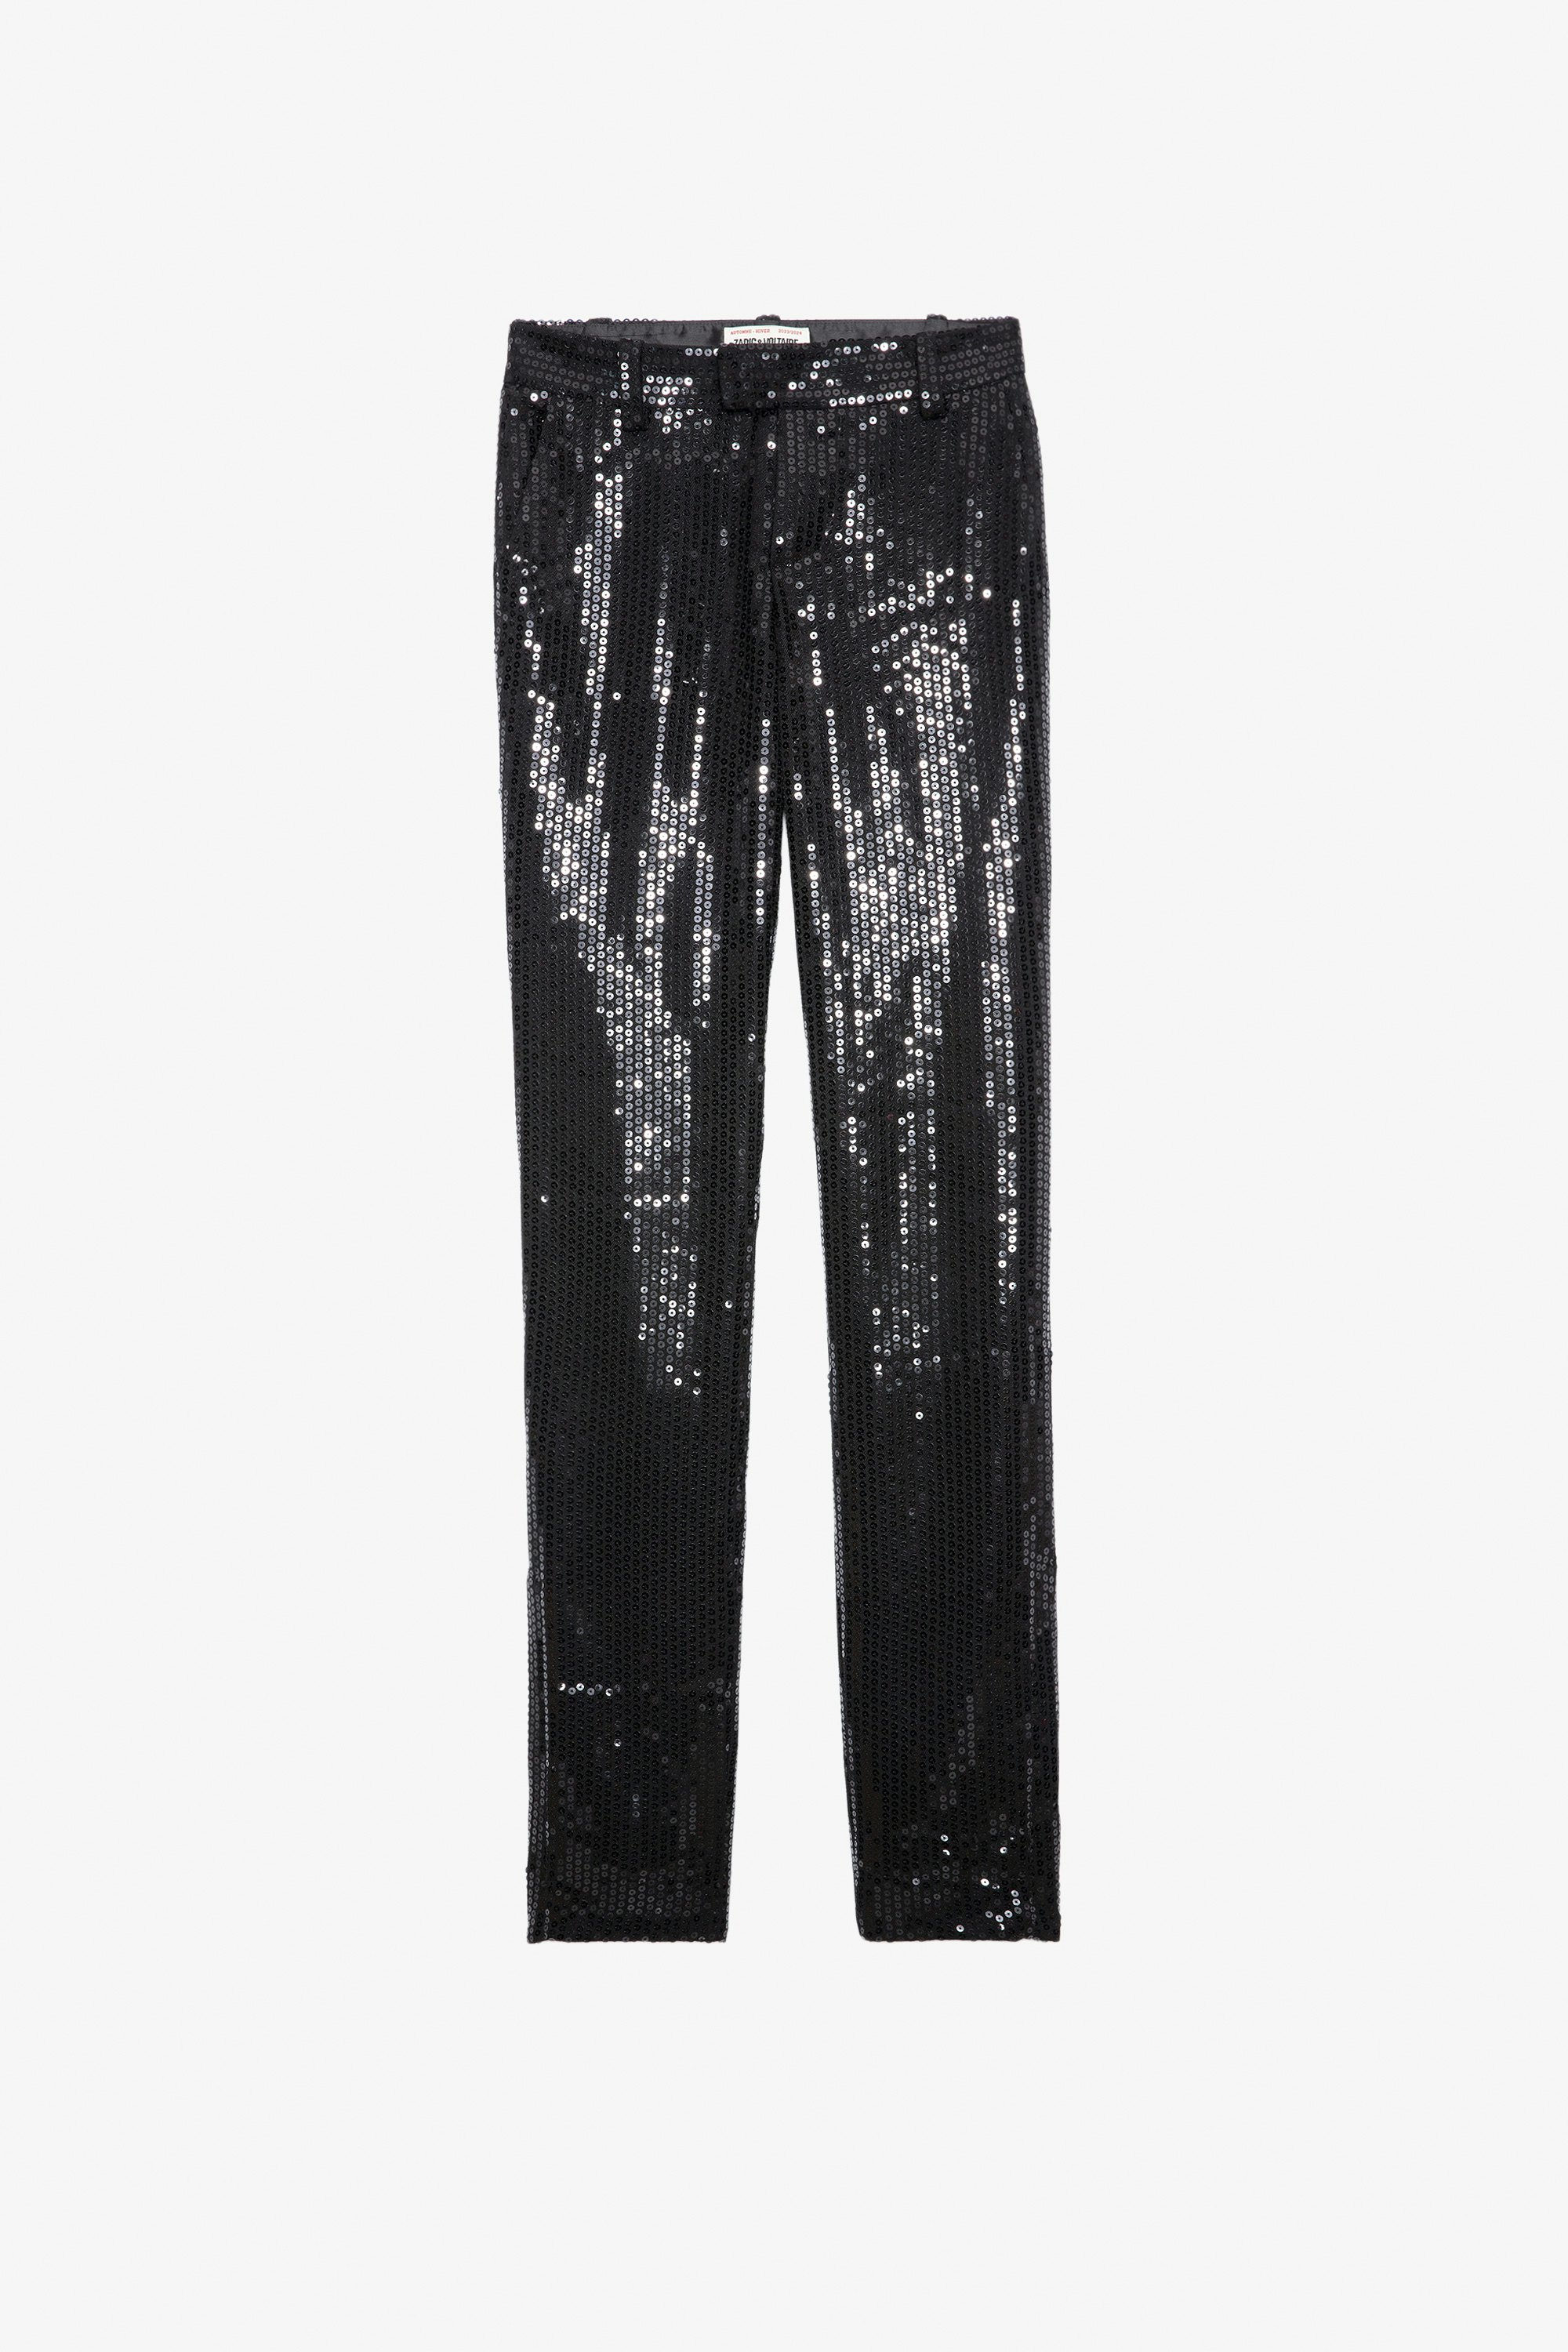 Prune Sequin Pants - Women’s black tailored pants with sequins, pockets and zip hem.